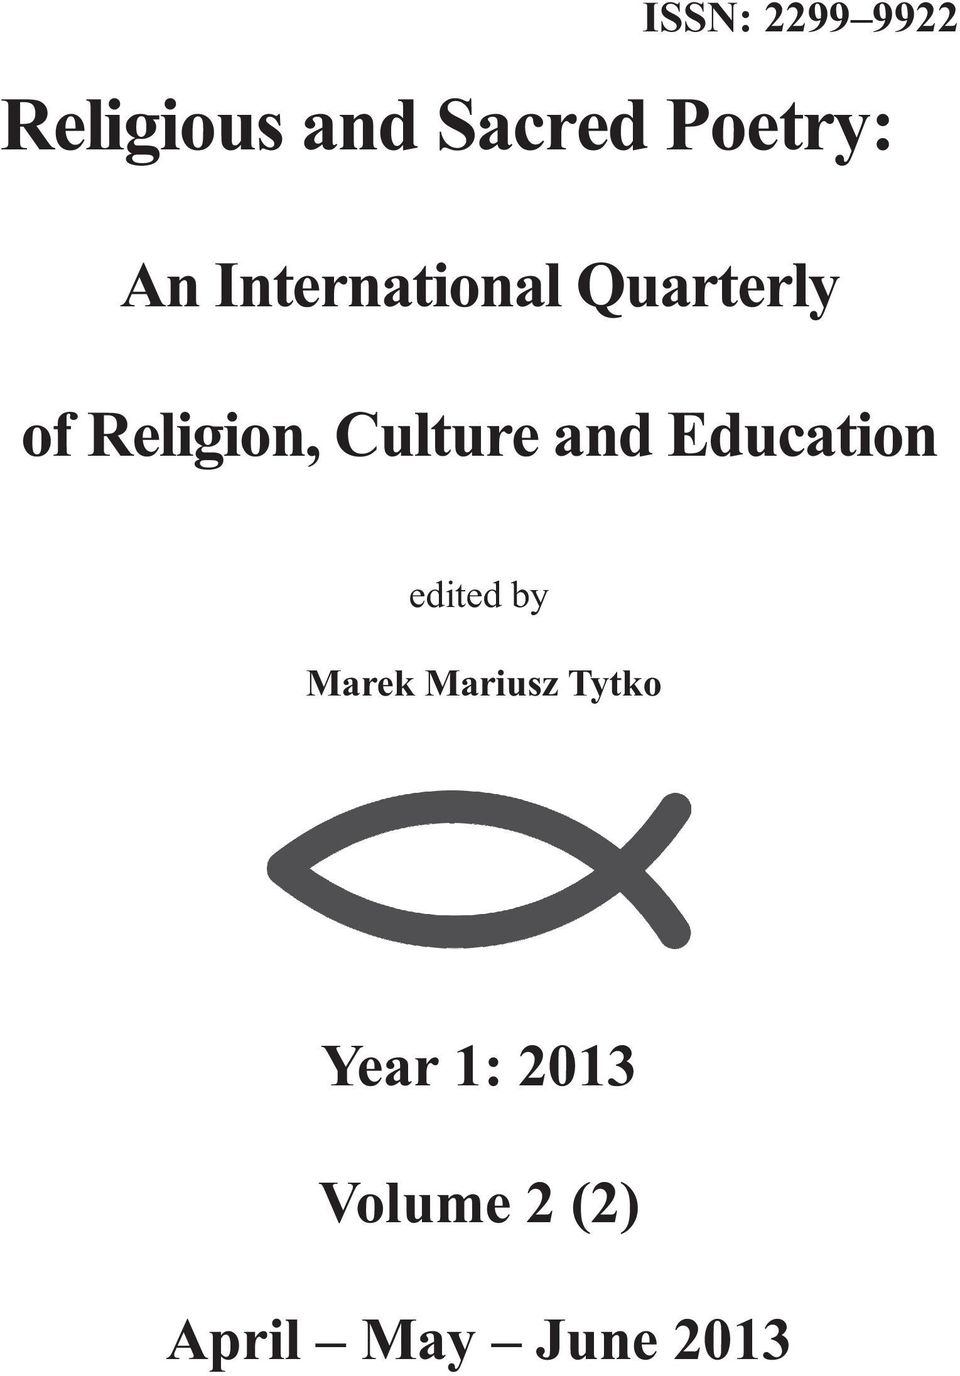 Culture and Education edited by Marek Mariusz